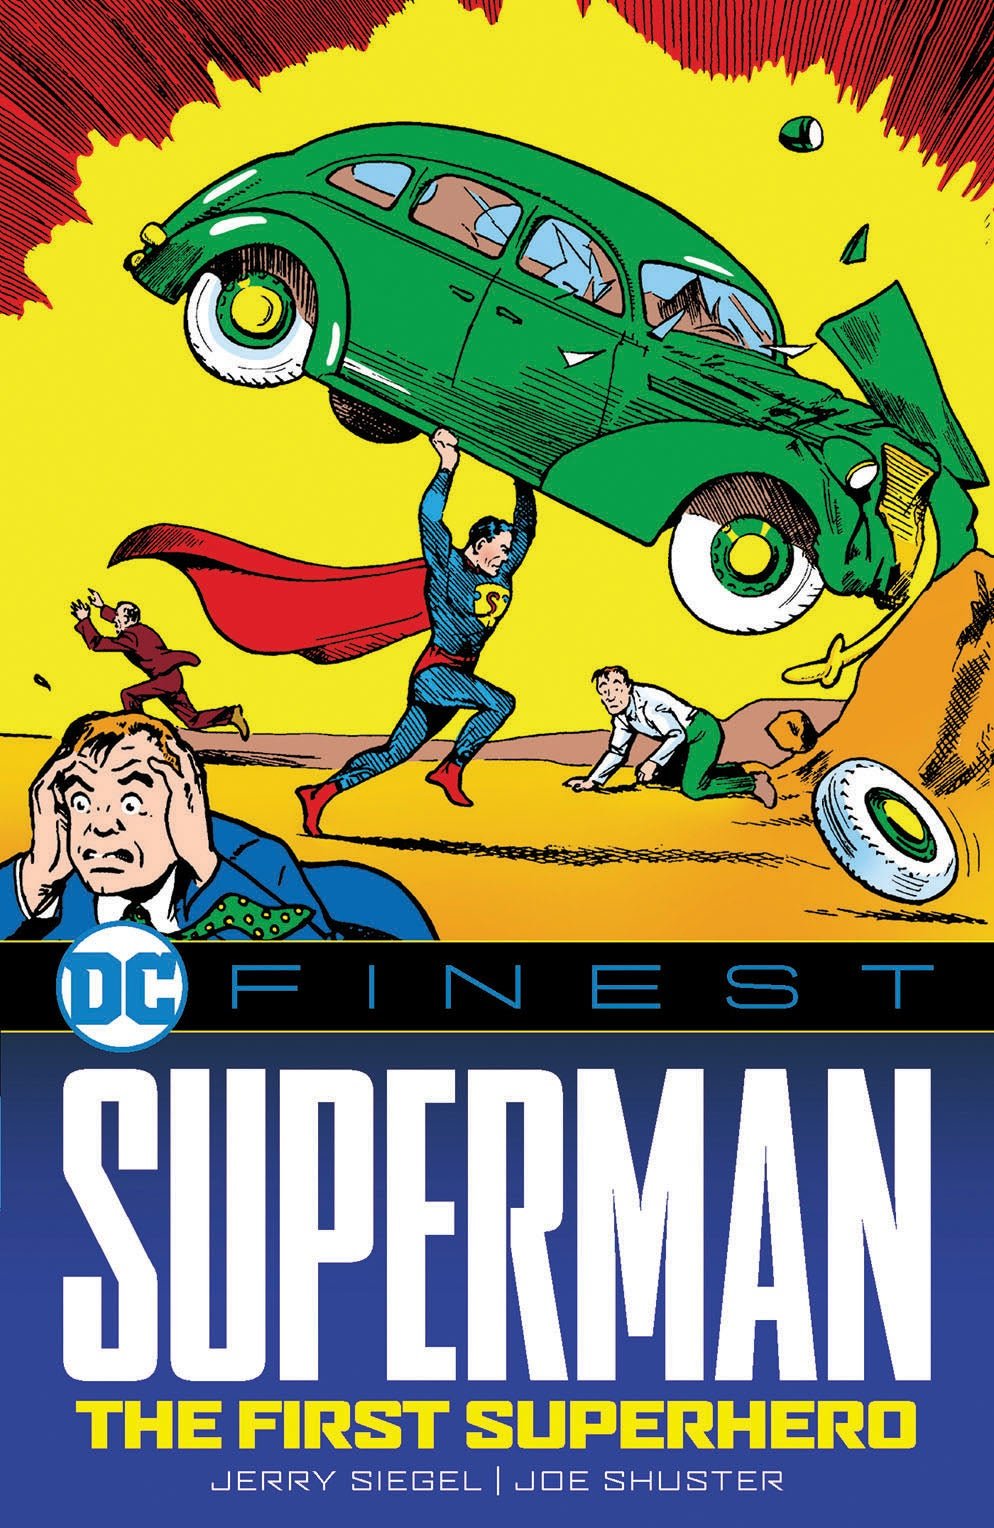 DC Finest: Superman - The First Superhero